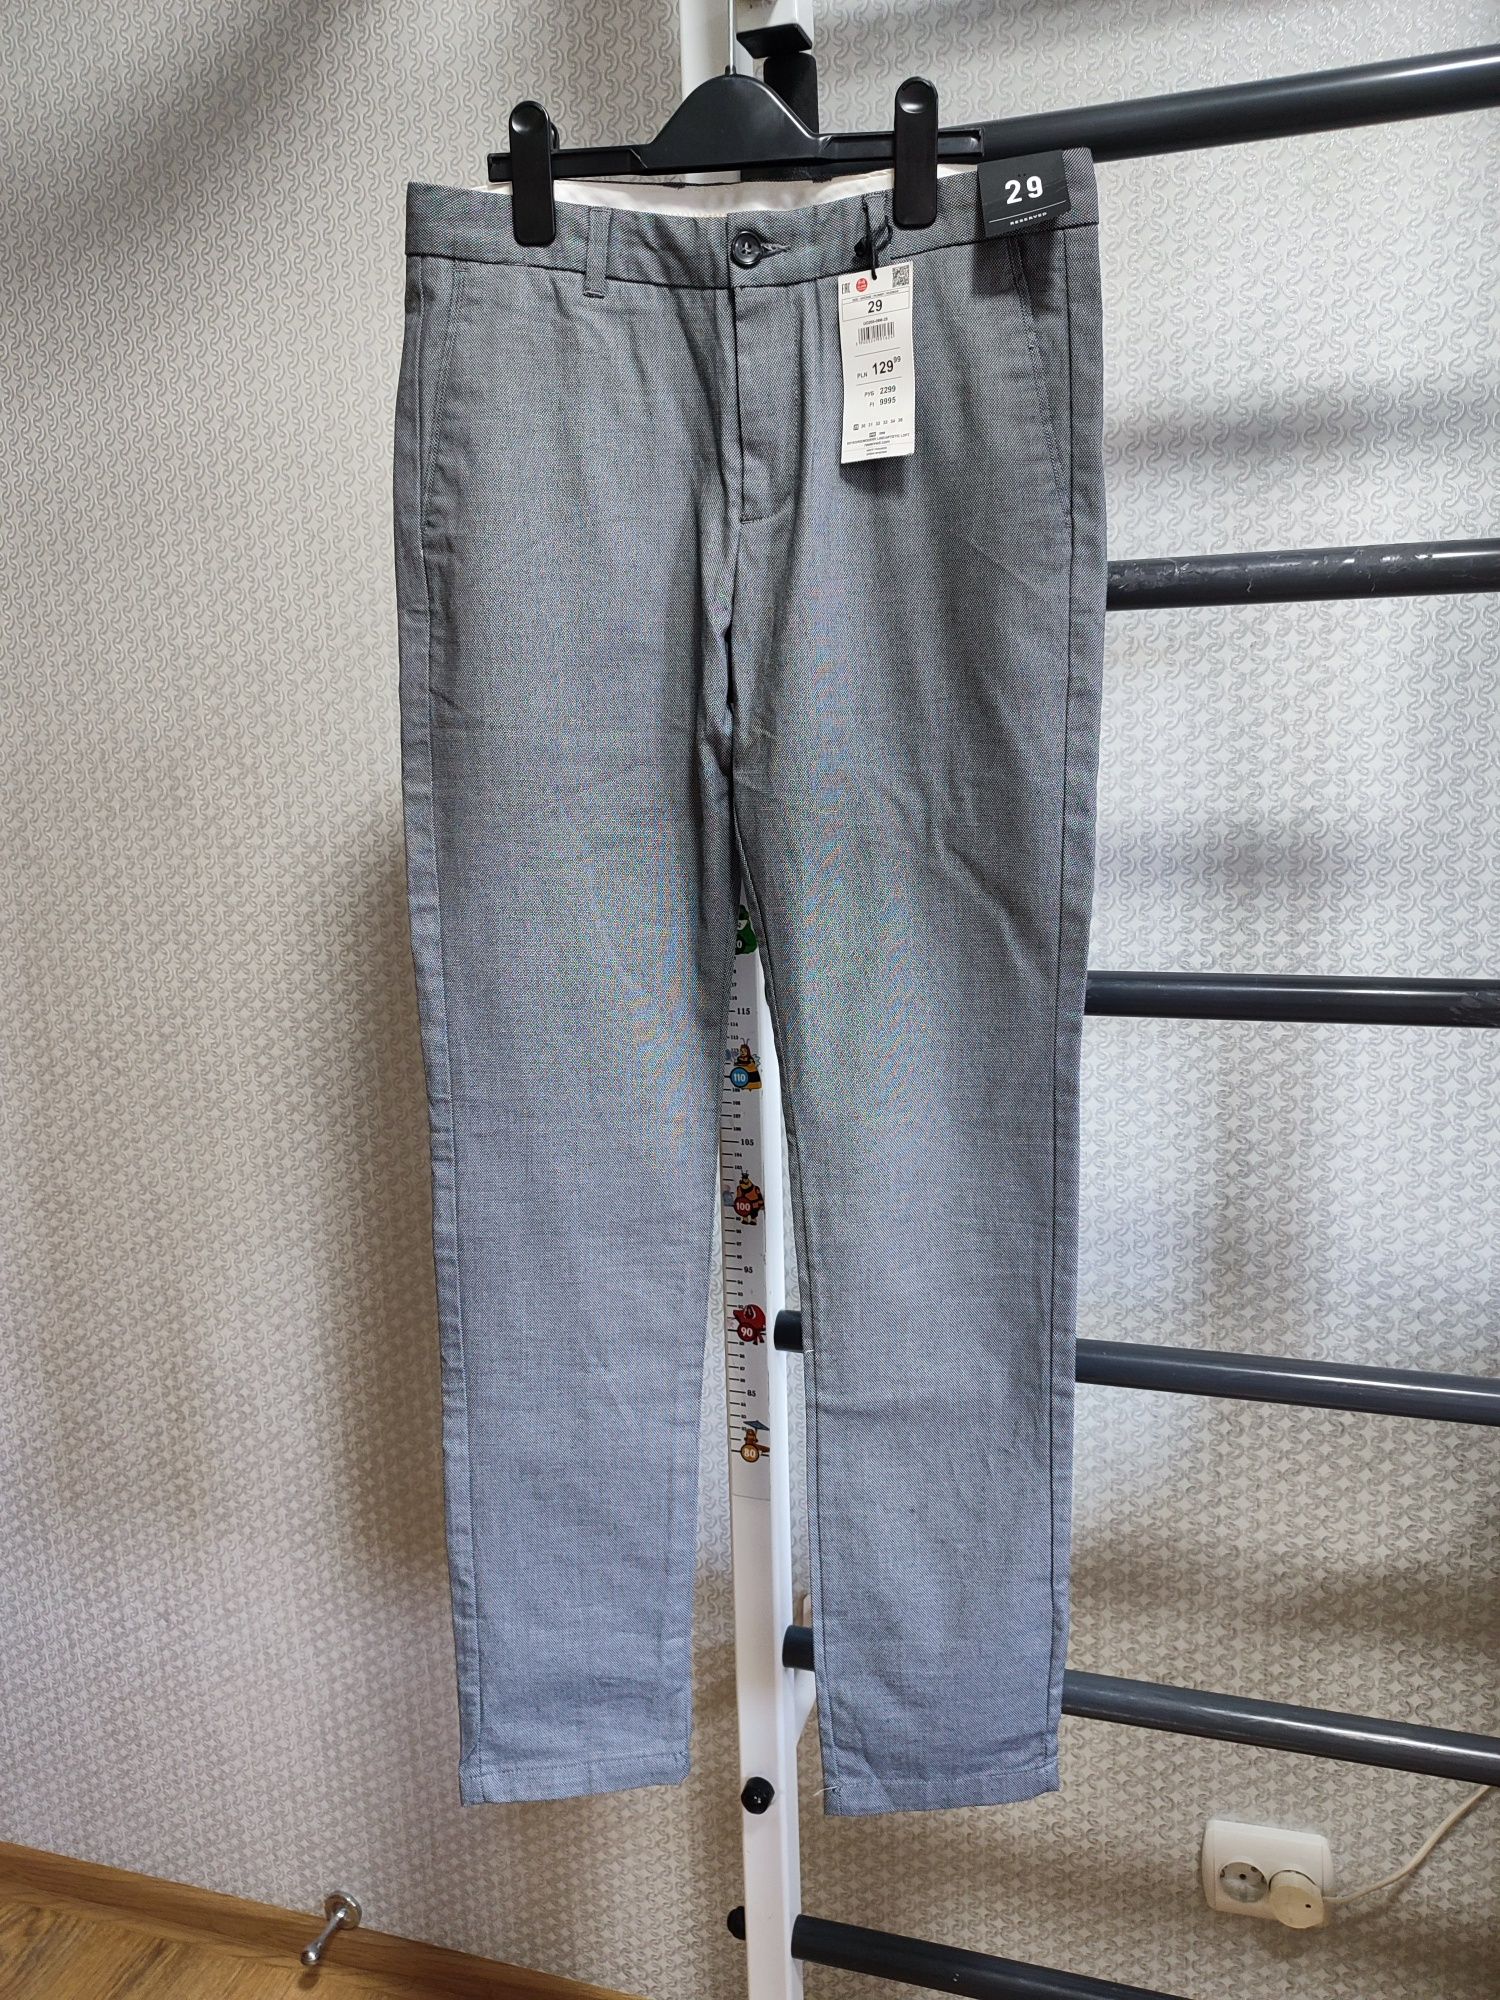 Приталені чіноси Reserved 29р штани котон приталенные штаны чиносы